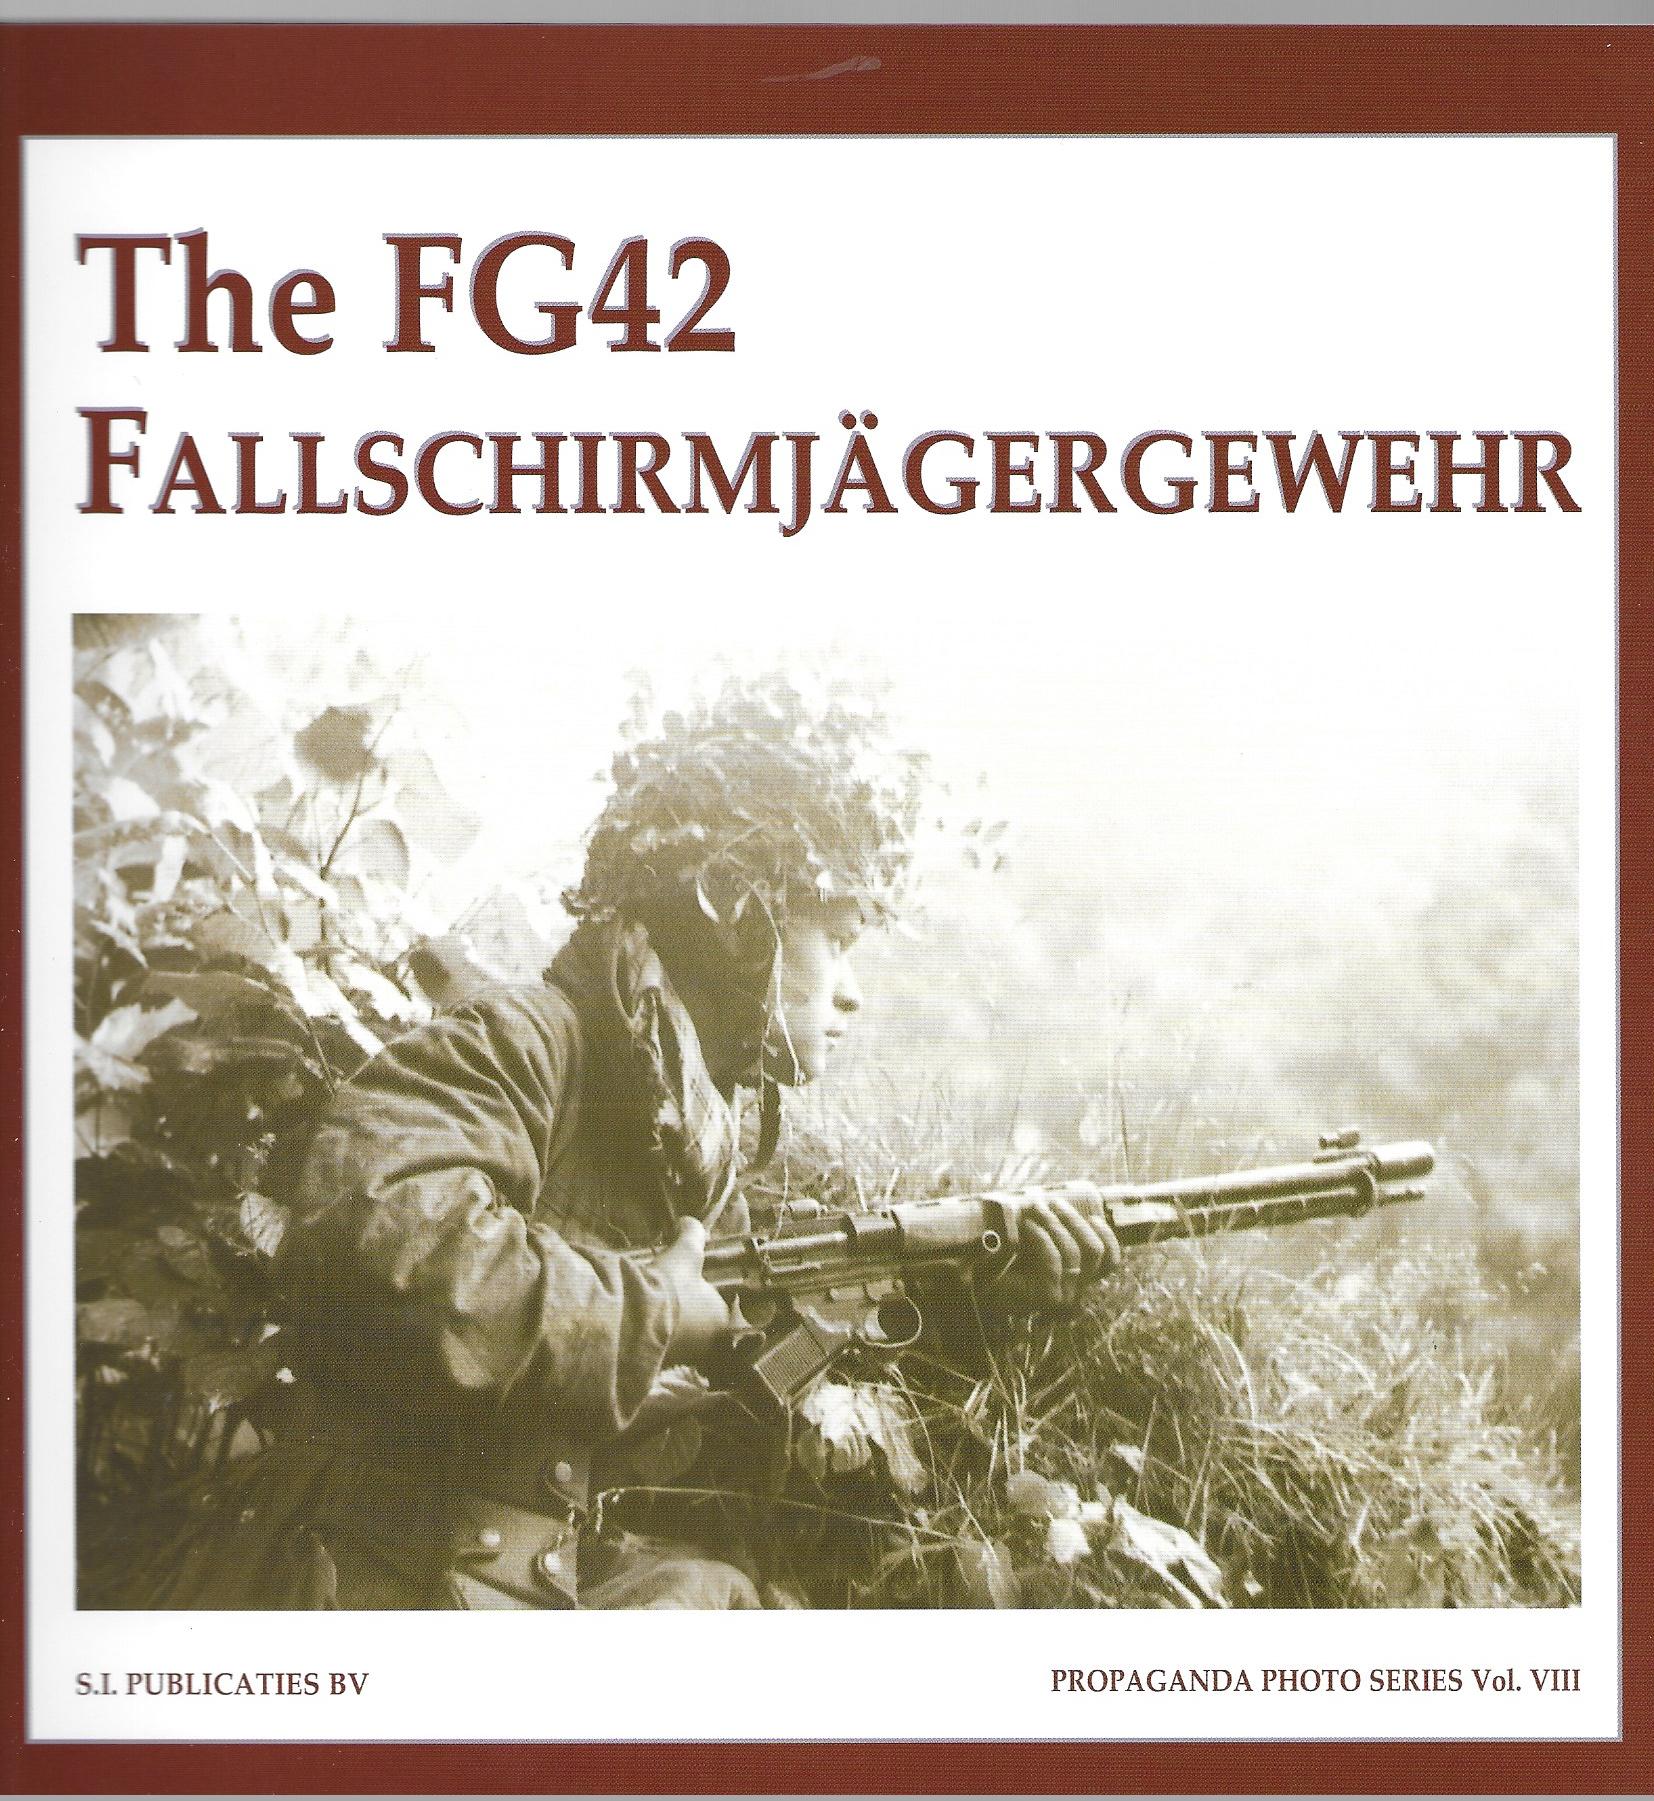 The FG42 Fallschirmjagergewehr: Propaganda Photo Series Vol. VIII - G. de Vries